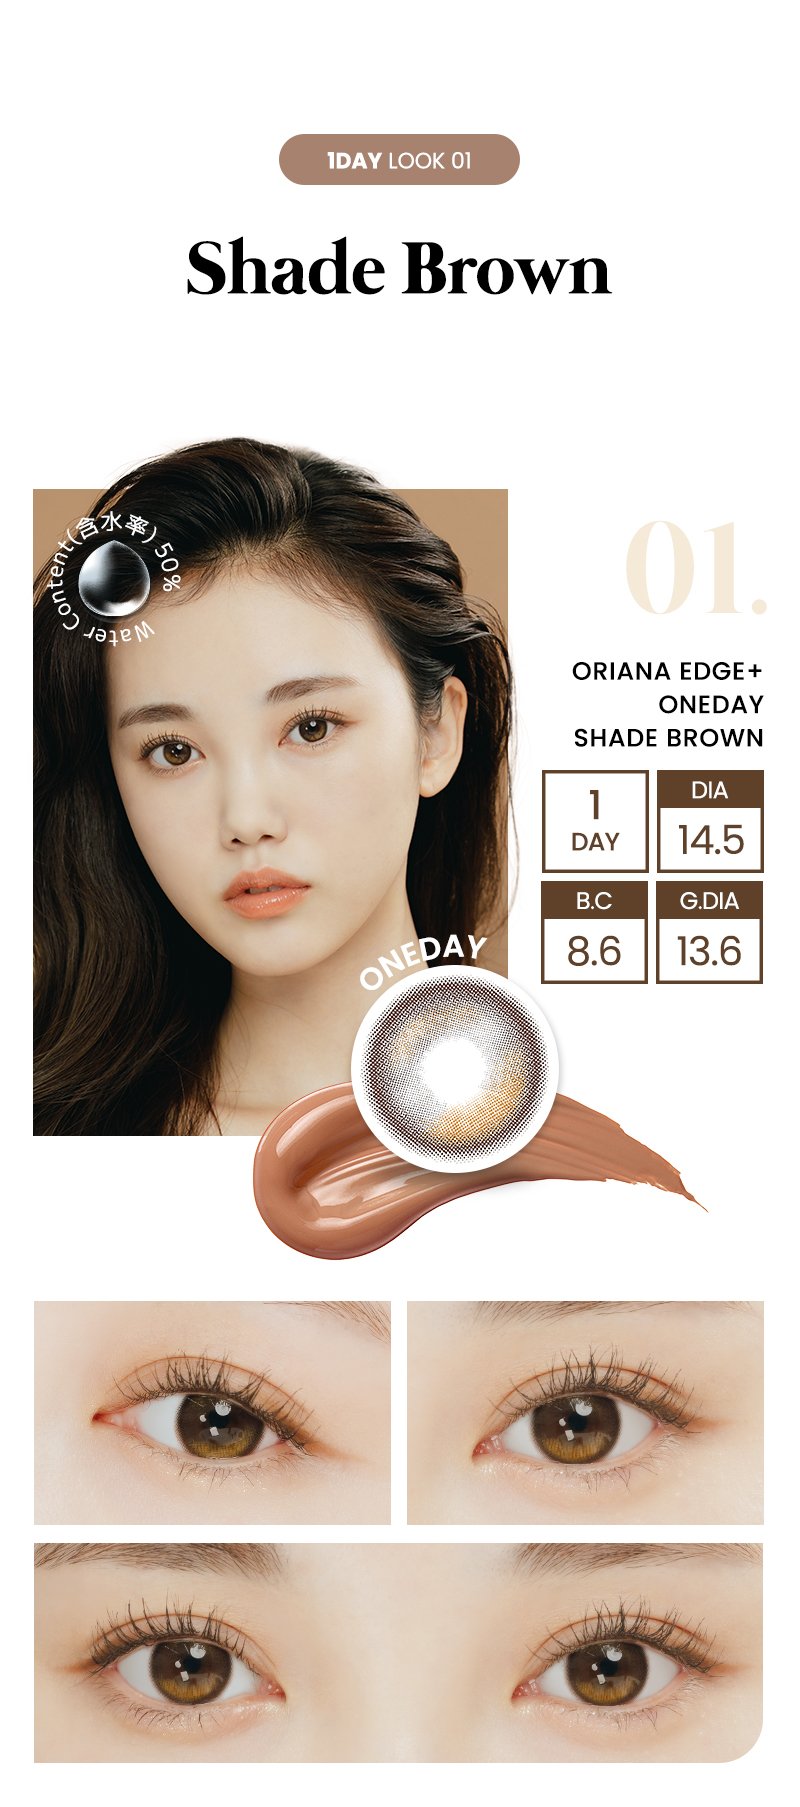 oriana-edge-plus-oneday shade brown